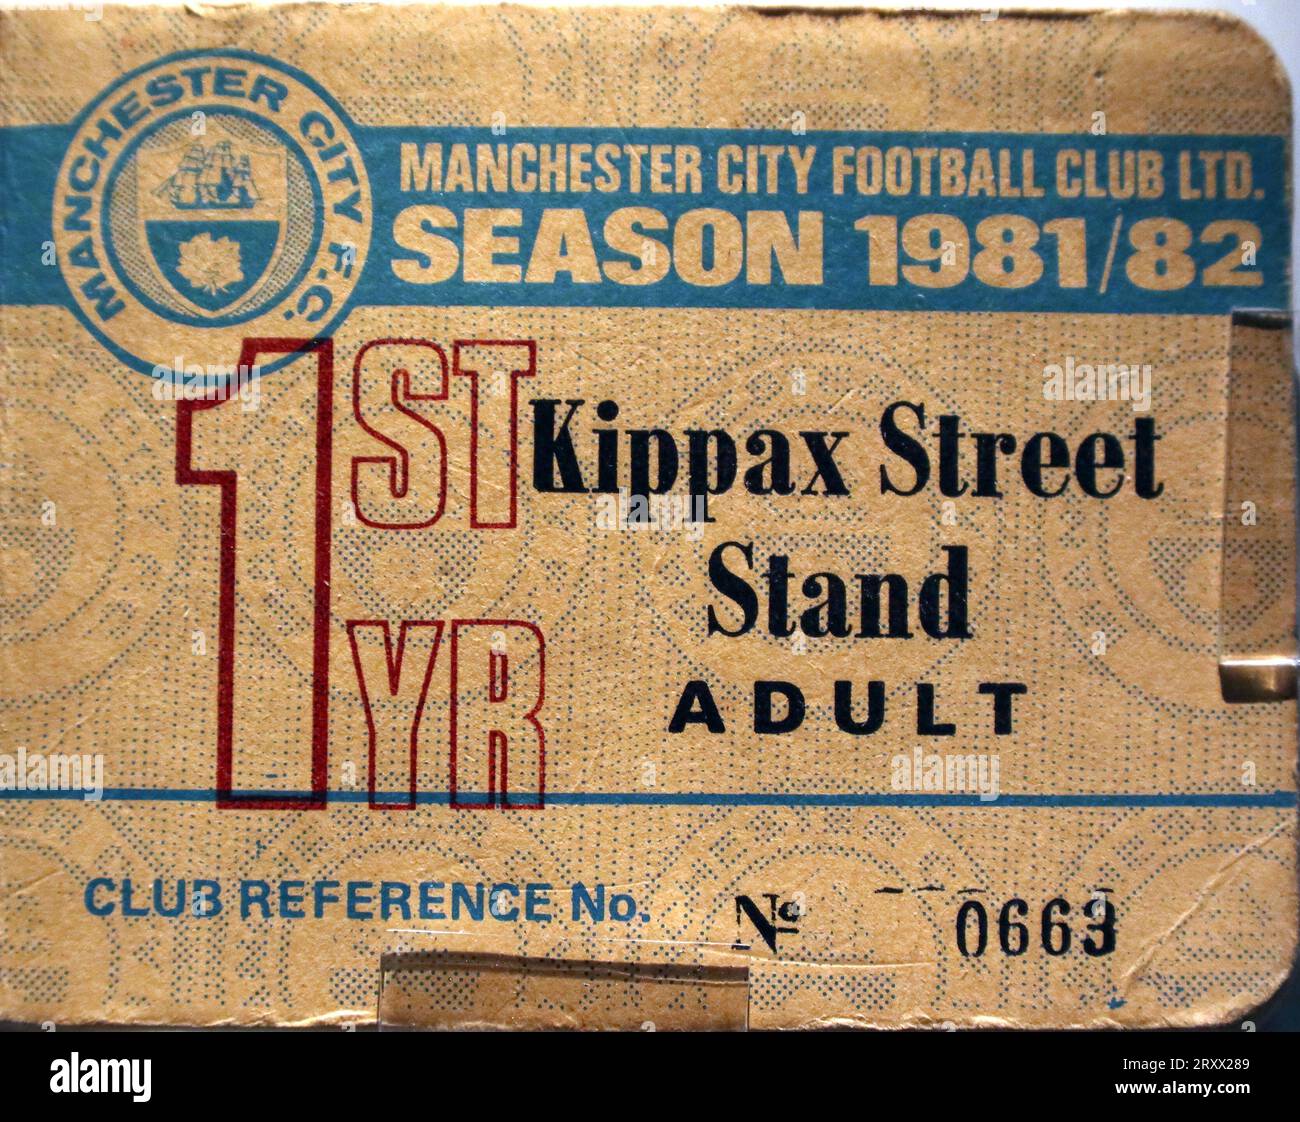 Season Ticket season 1981/82, Manchester City Football club - Kippax St - Maine Road Stock Photo